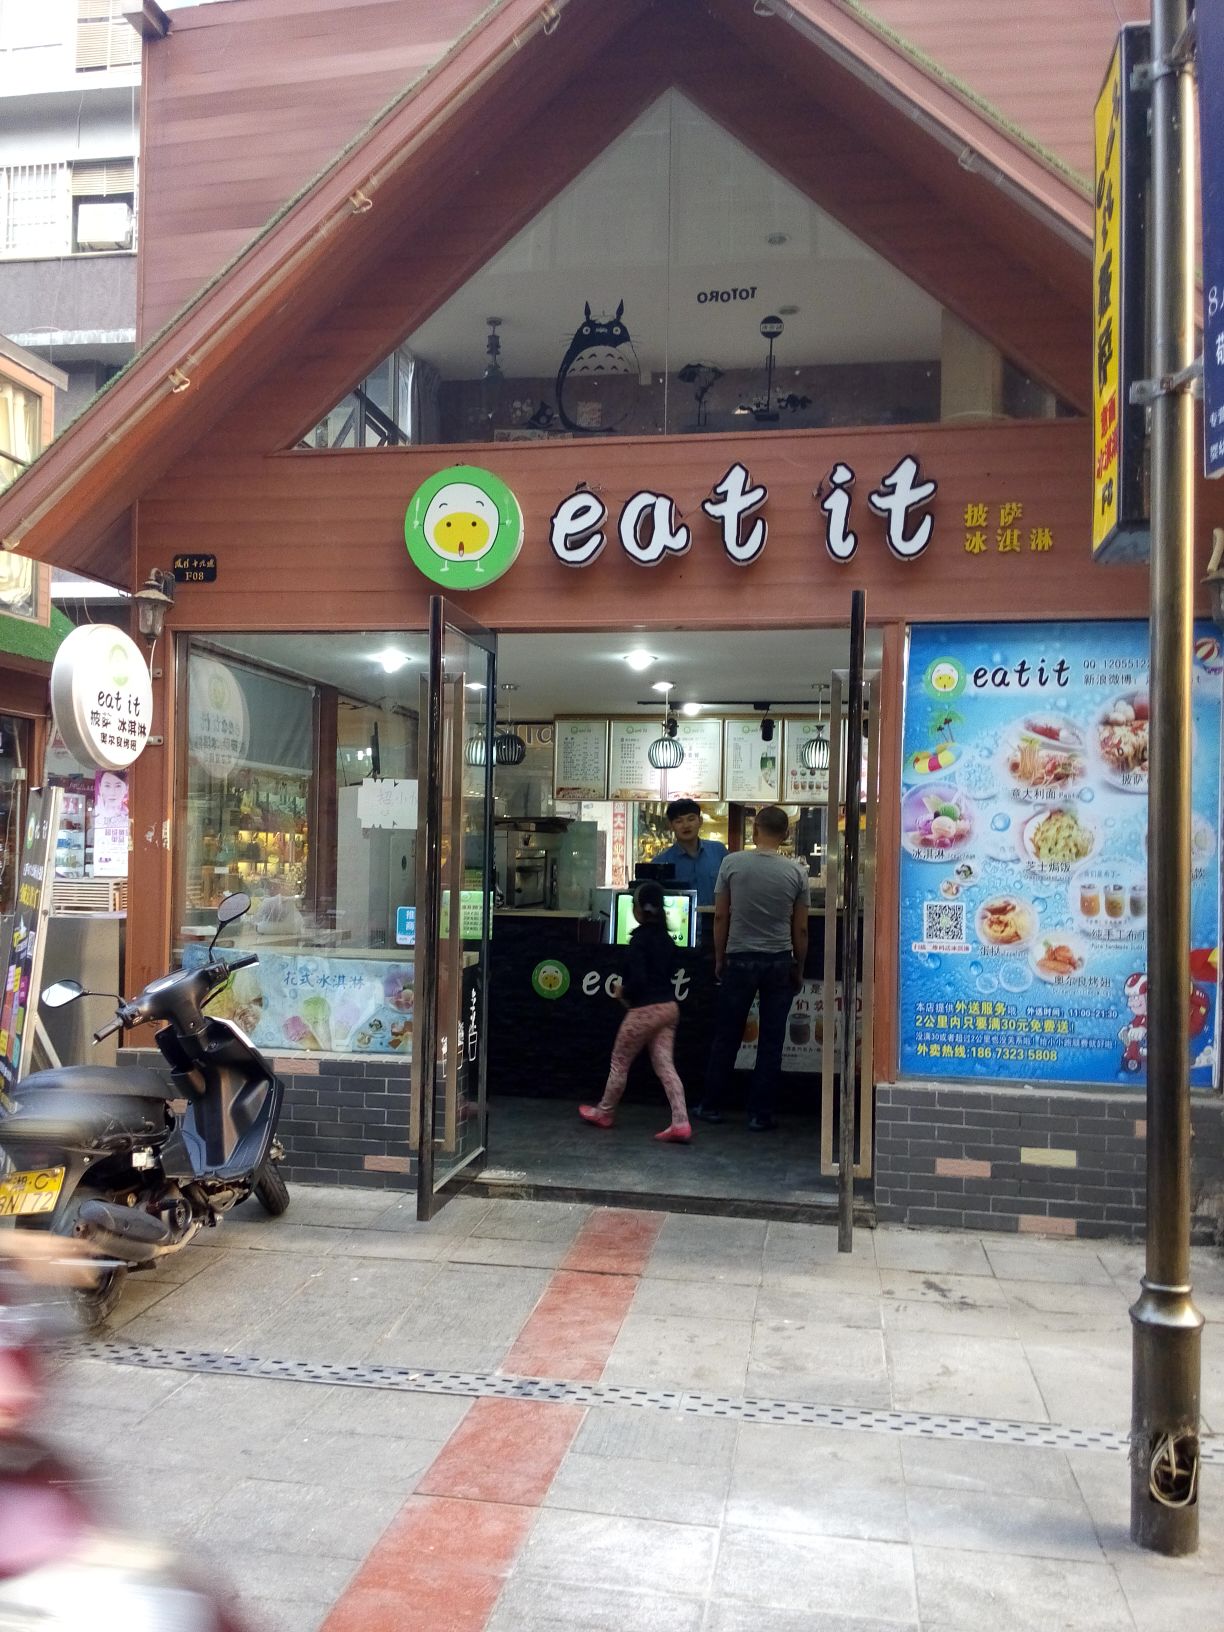 eat it披萨(河东店)